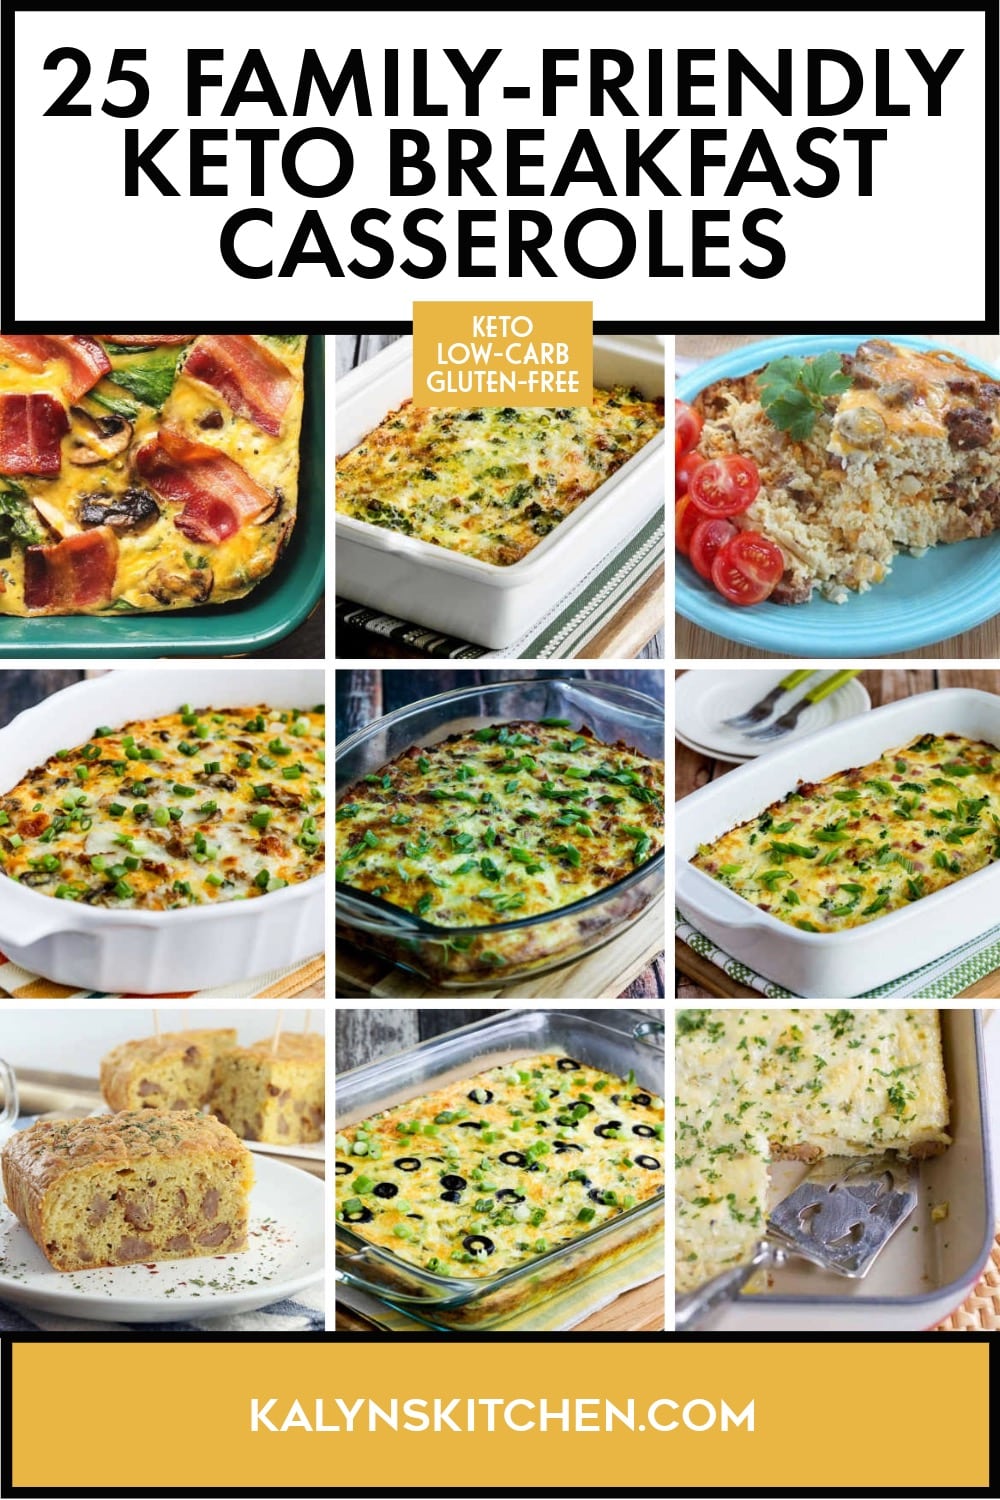 Pinterest image of 25 Family-Friendly Keto Breakfast Casseroles